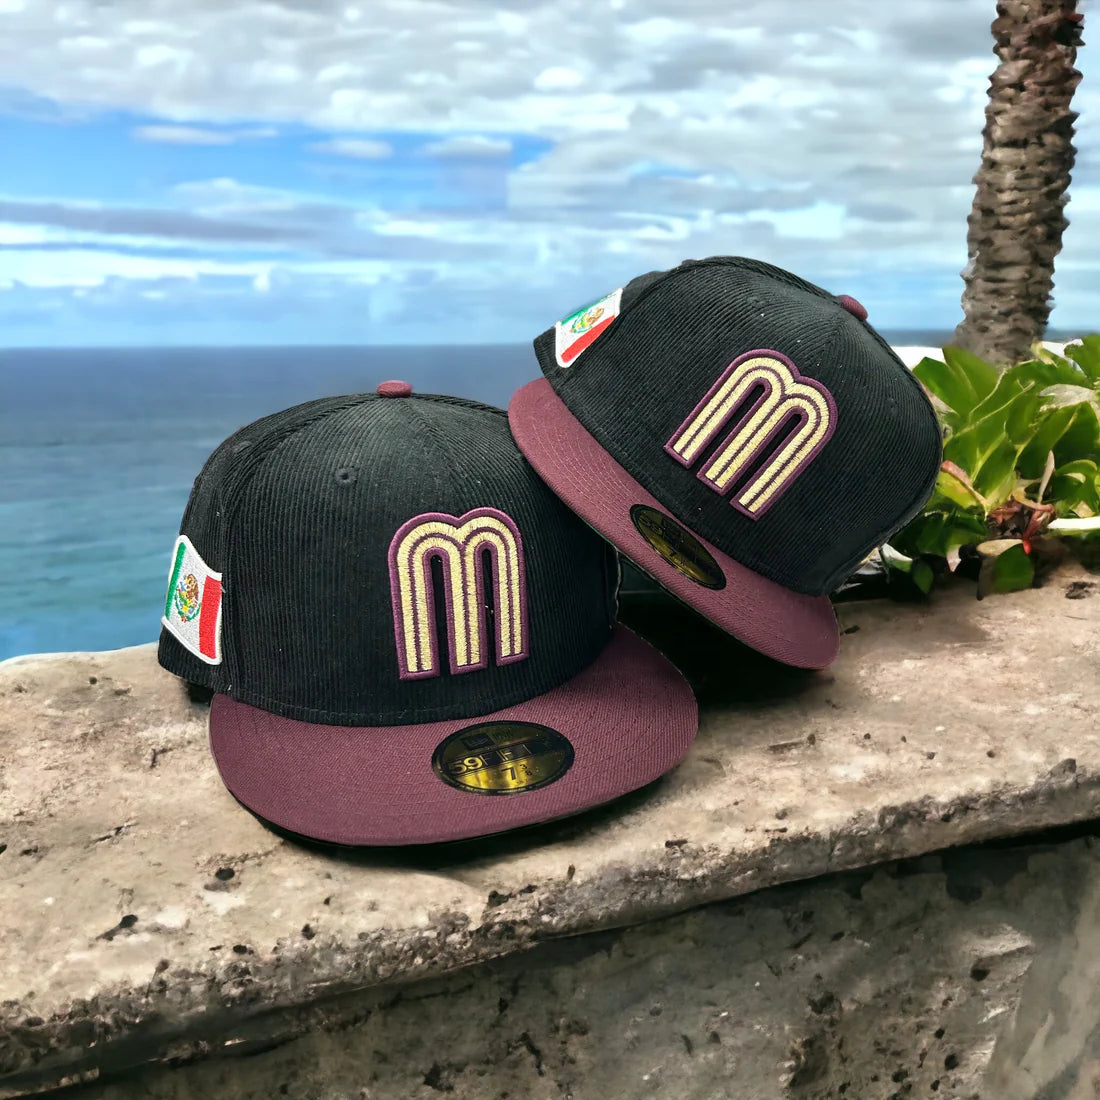 Mexico Burgundy/Black New Era Fitted Hat - BeisbolMXShop